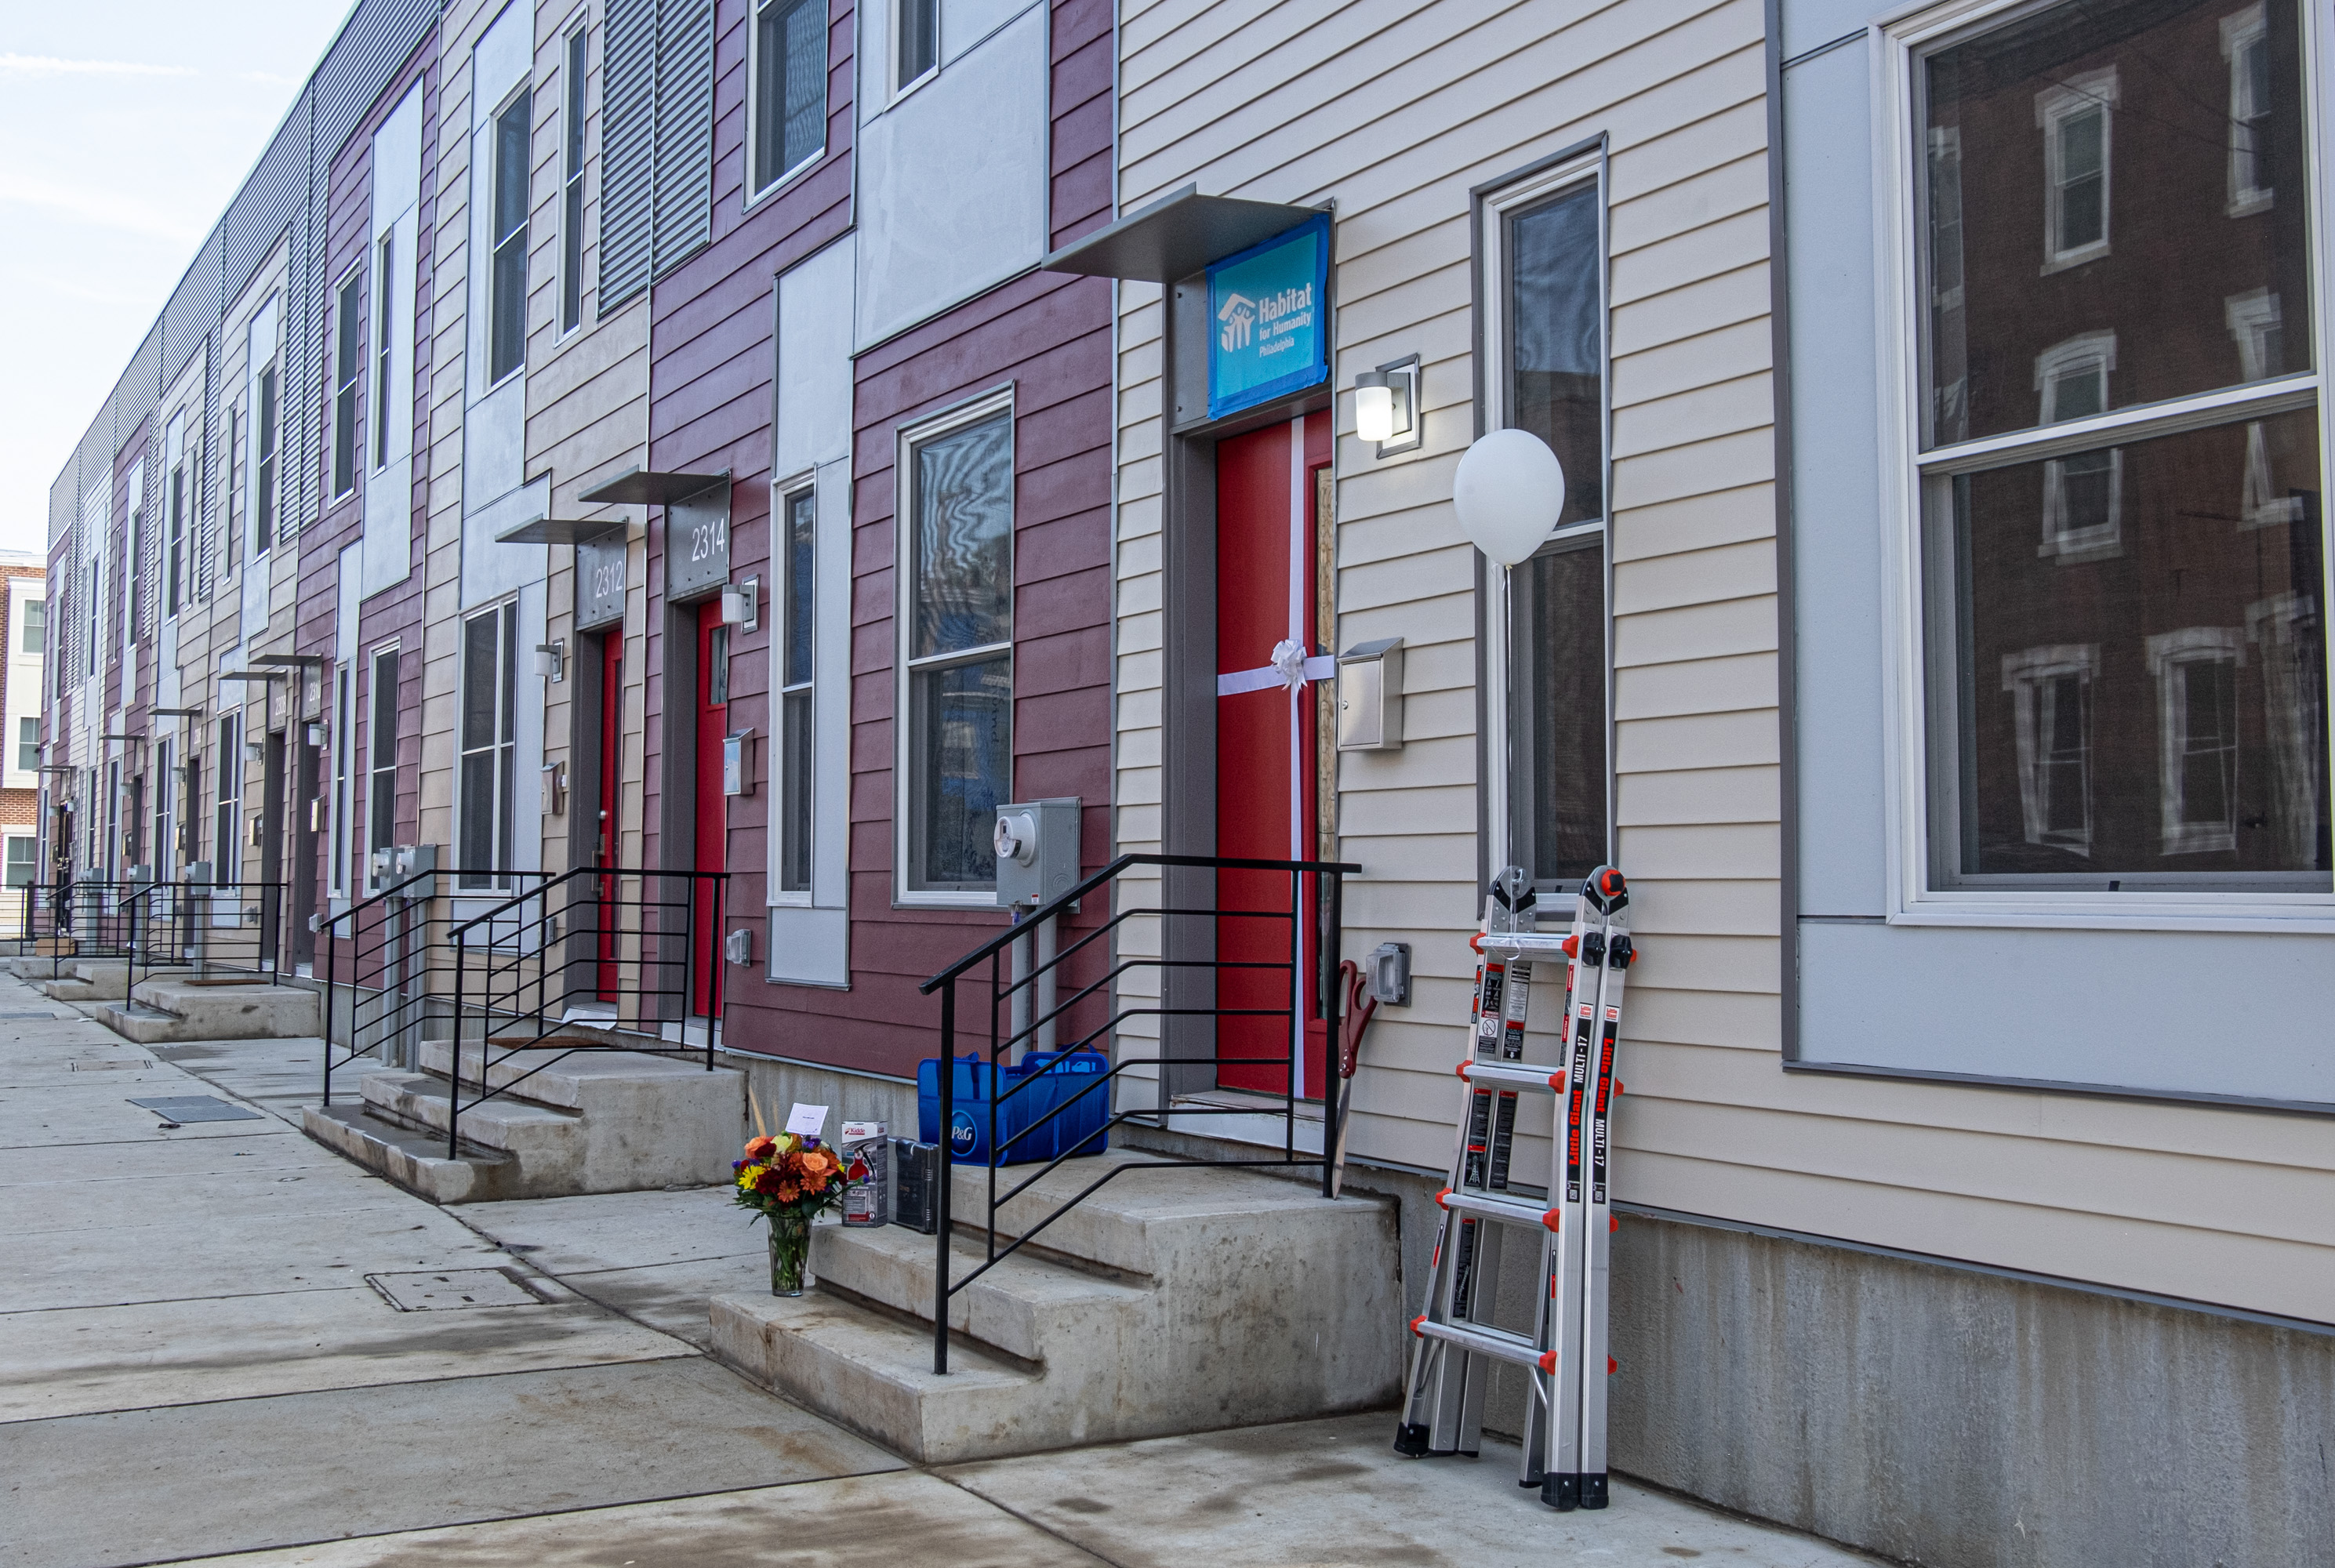 Strawberry Mansion Historic Home Repair Program Construction Begins - LISC  Philadelphia